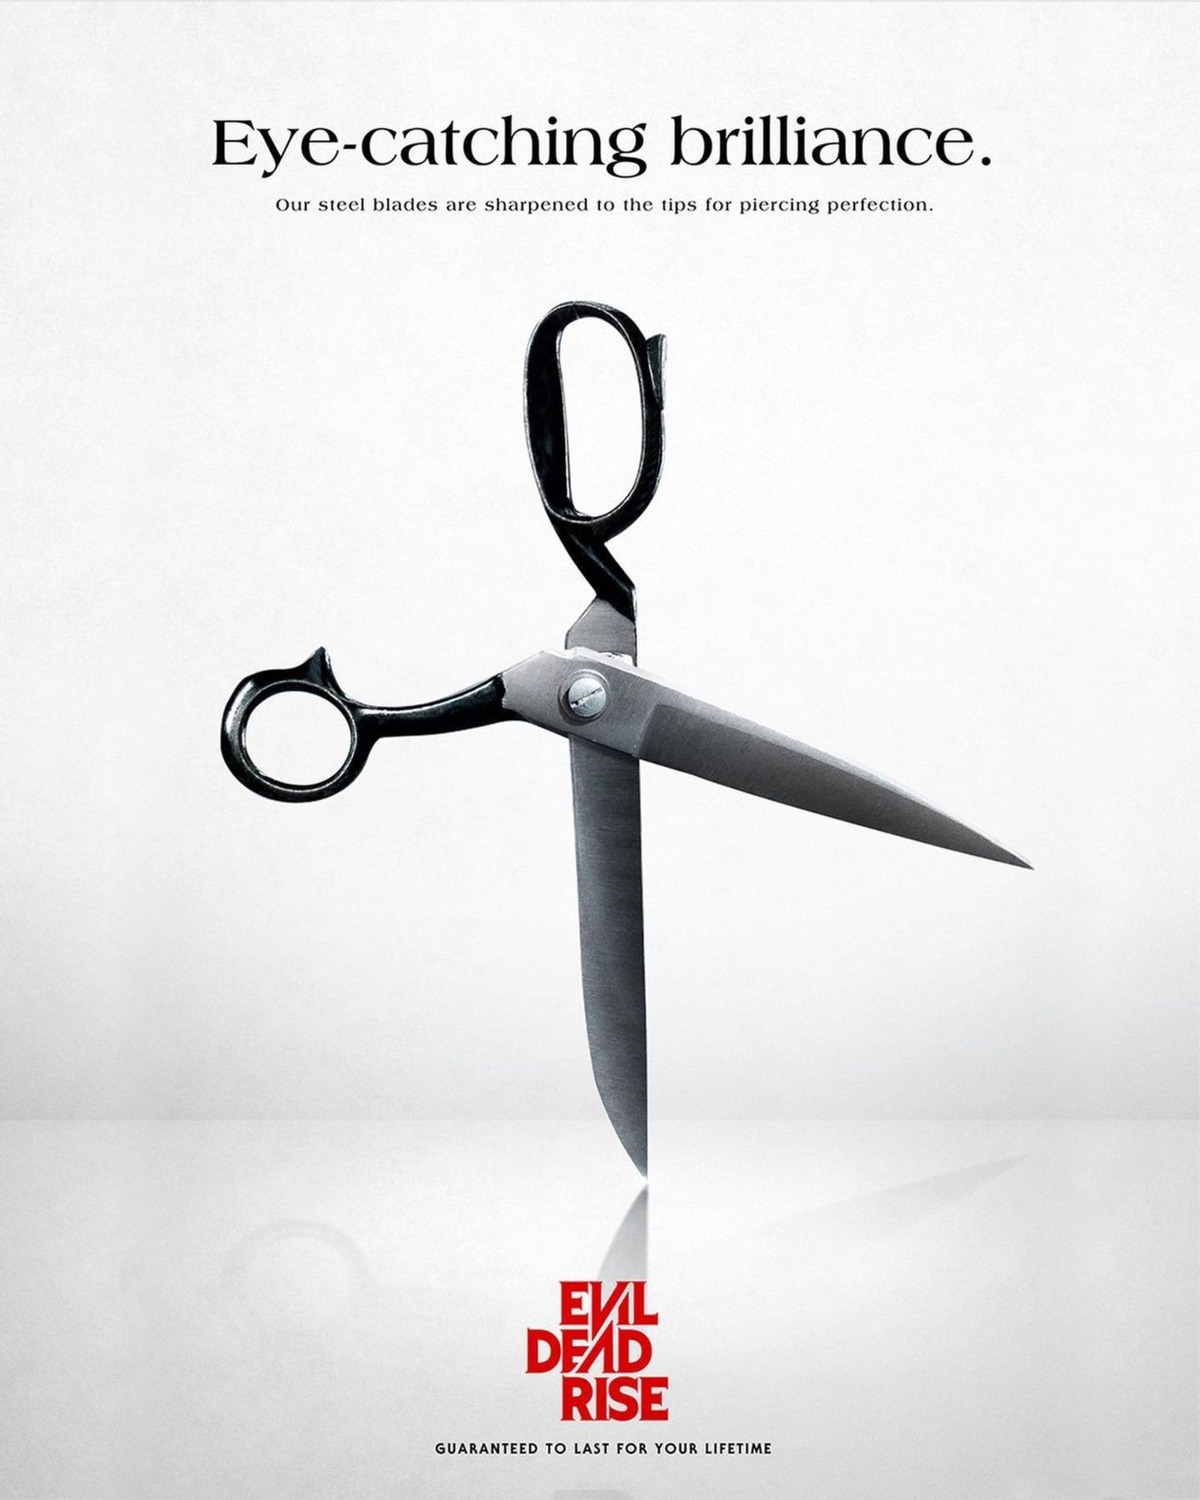 Evil Dead (#3 of 5): Mega Sized Movie Poster Image - IMP Awards